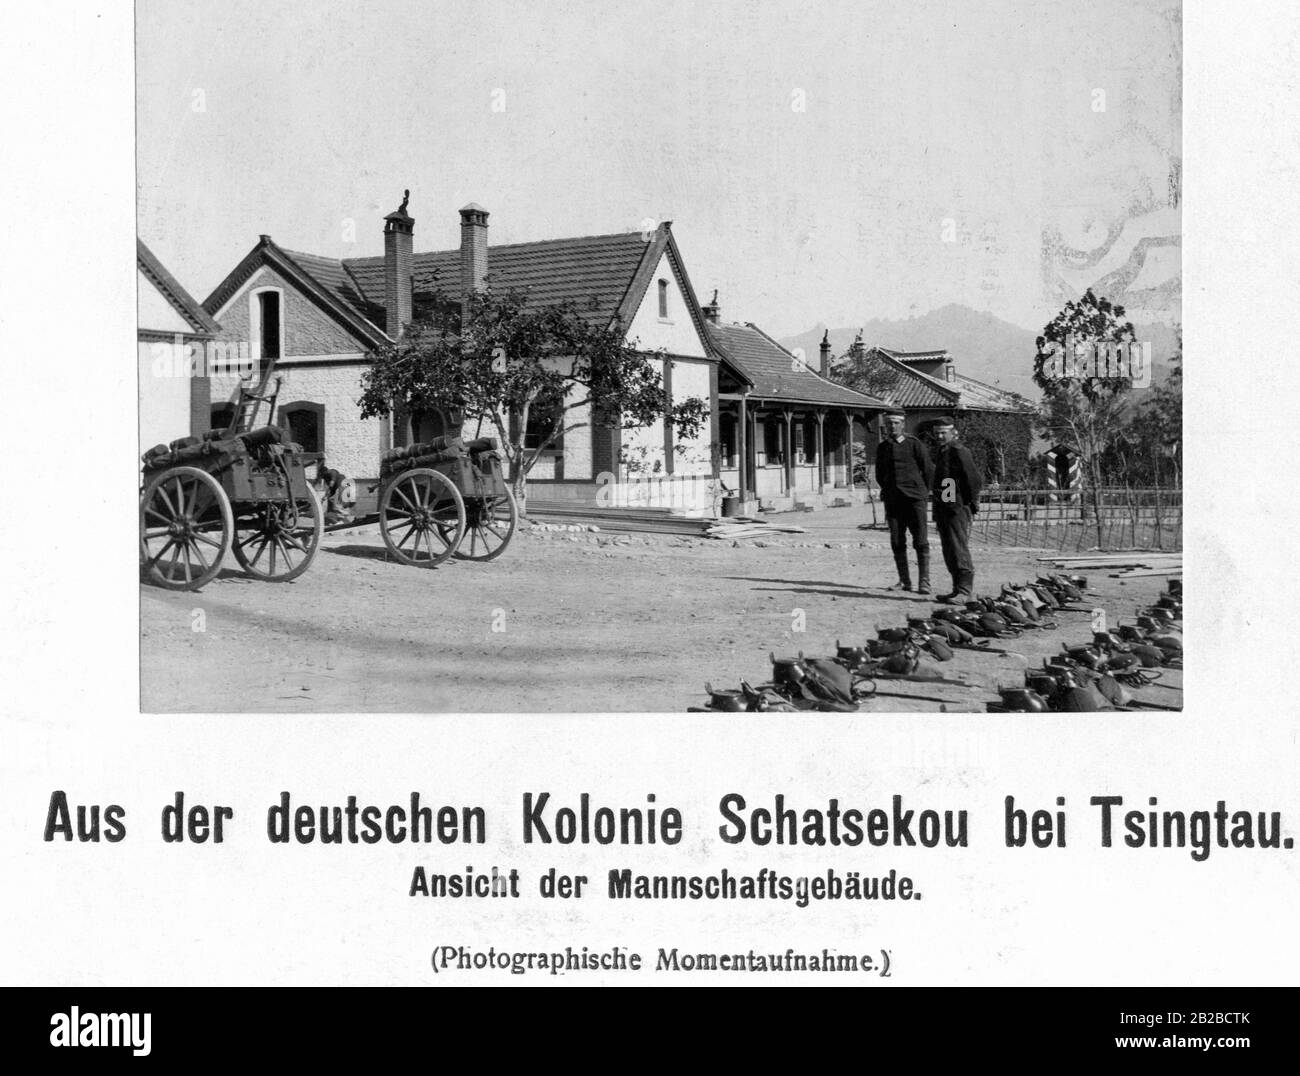 View of the German team building in the German colony Schatsekou near Tsingtau. Stock Photo